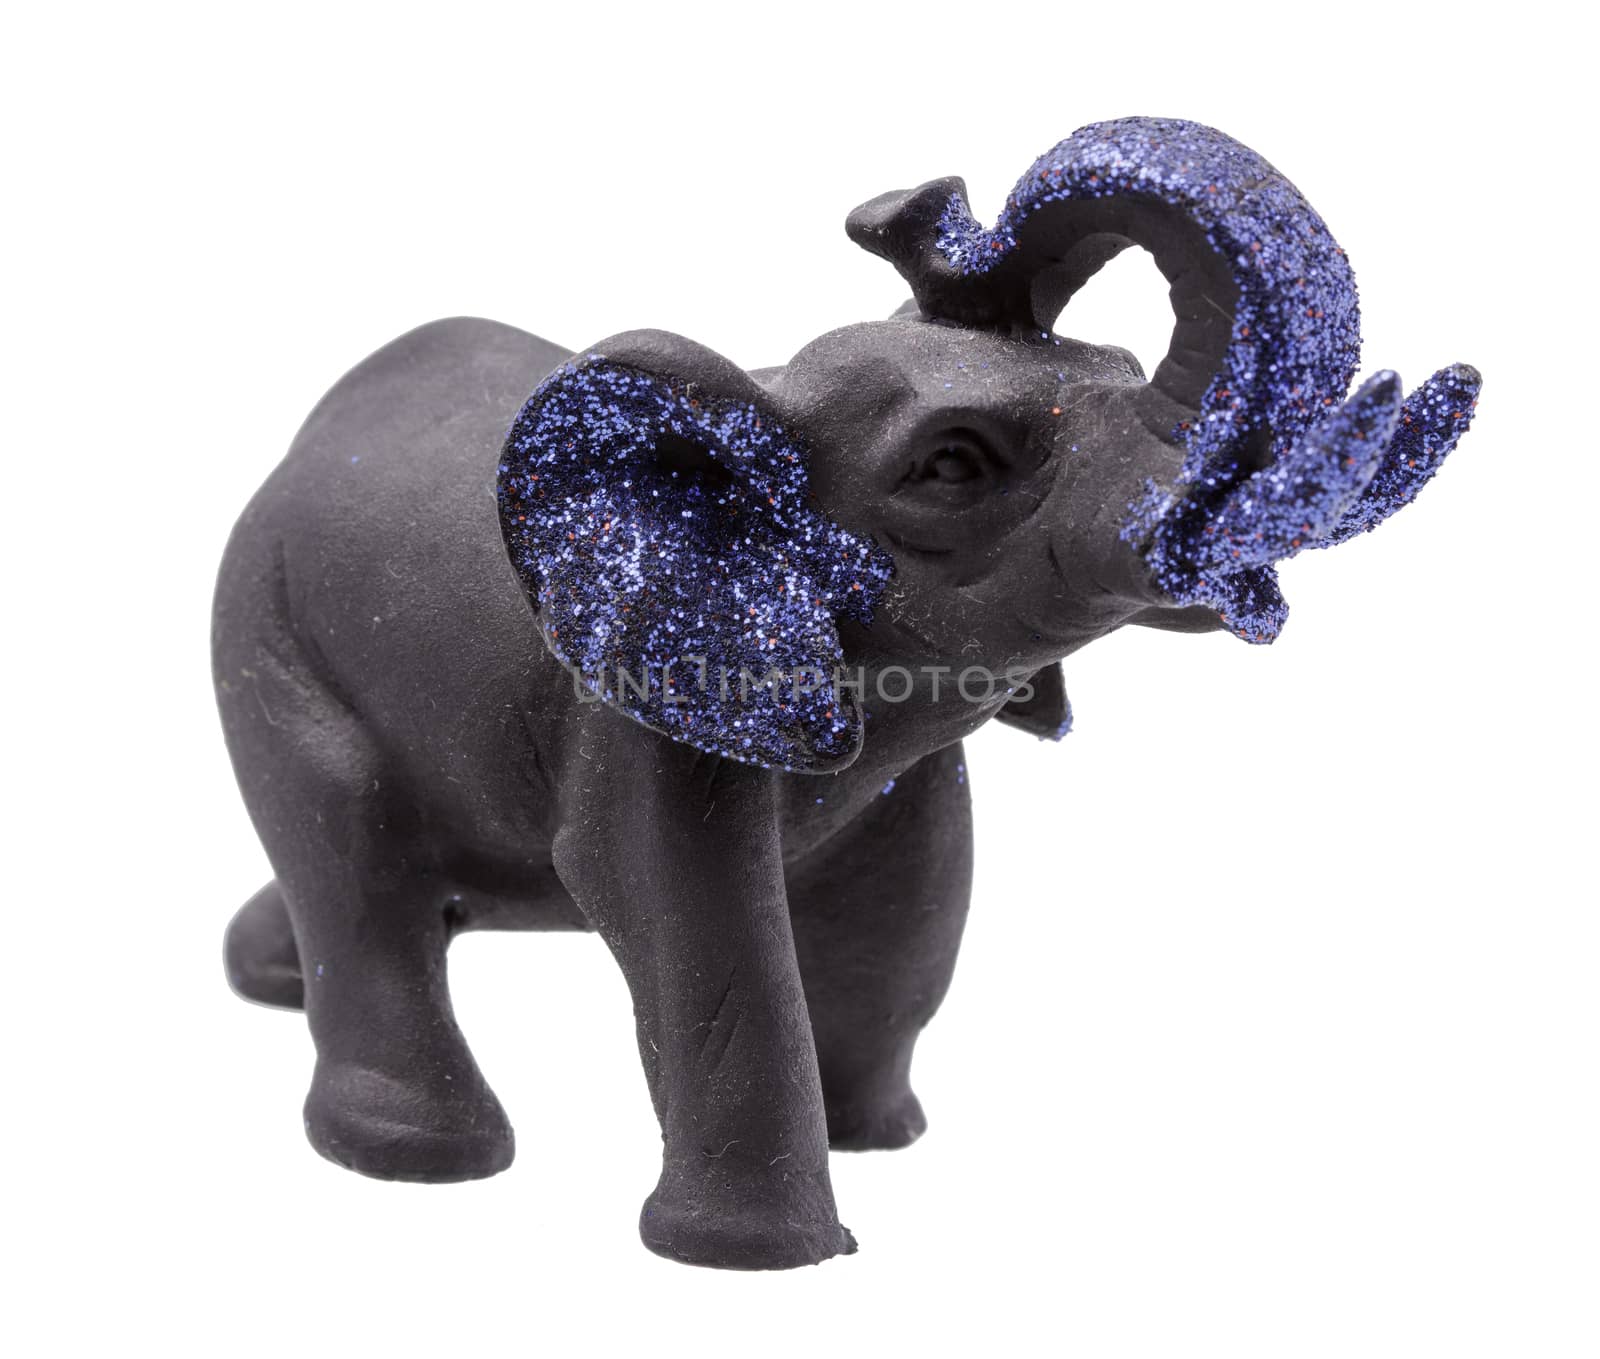 Black Elephant Figurine with Blue Glitter on white Background by gstalker